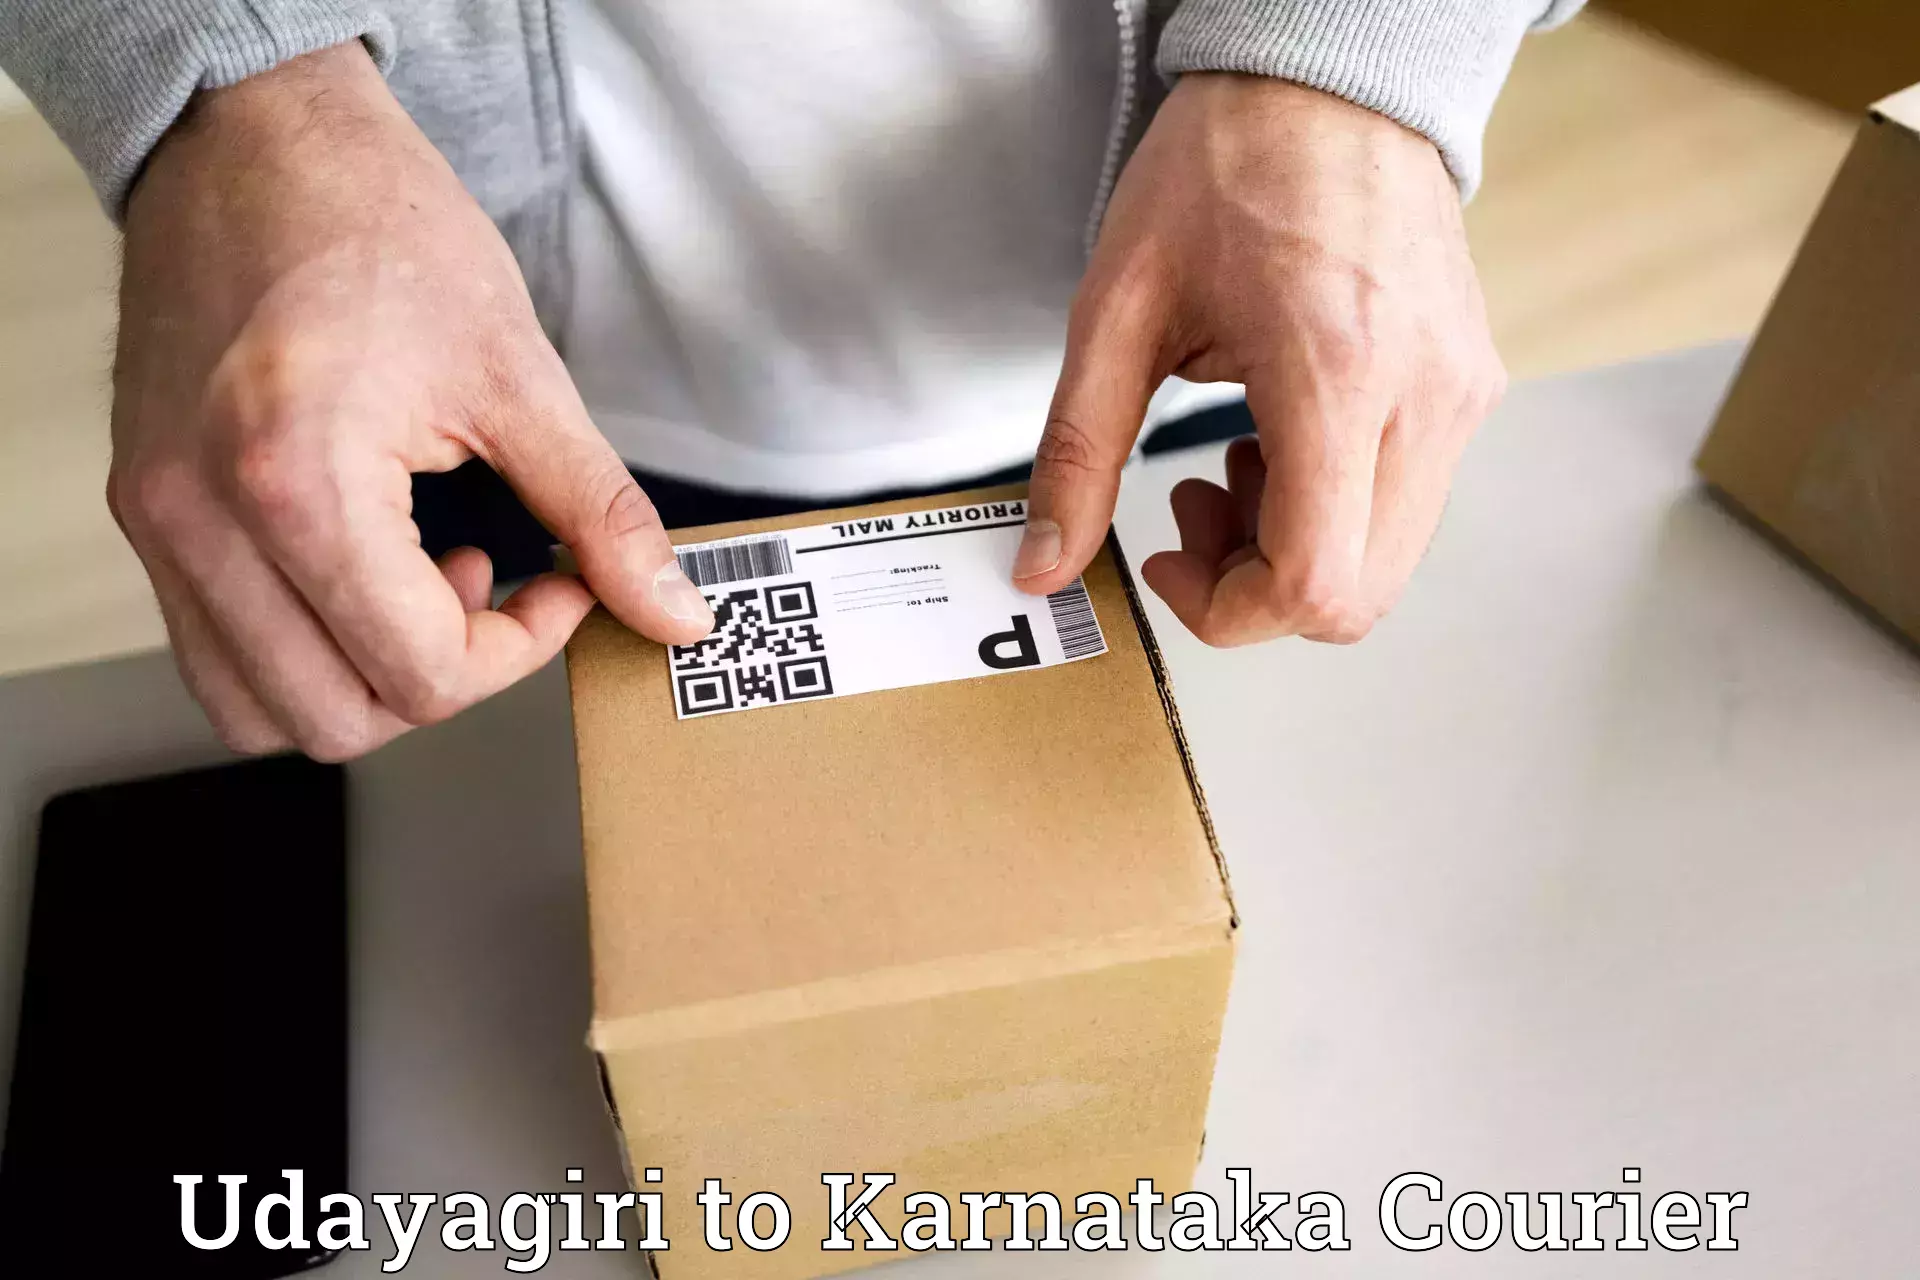 Global logistics network Udayagiri to Karnataka